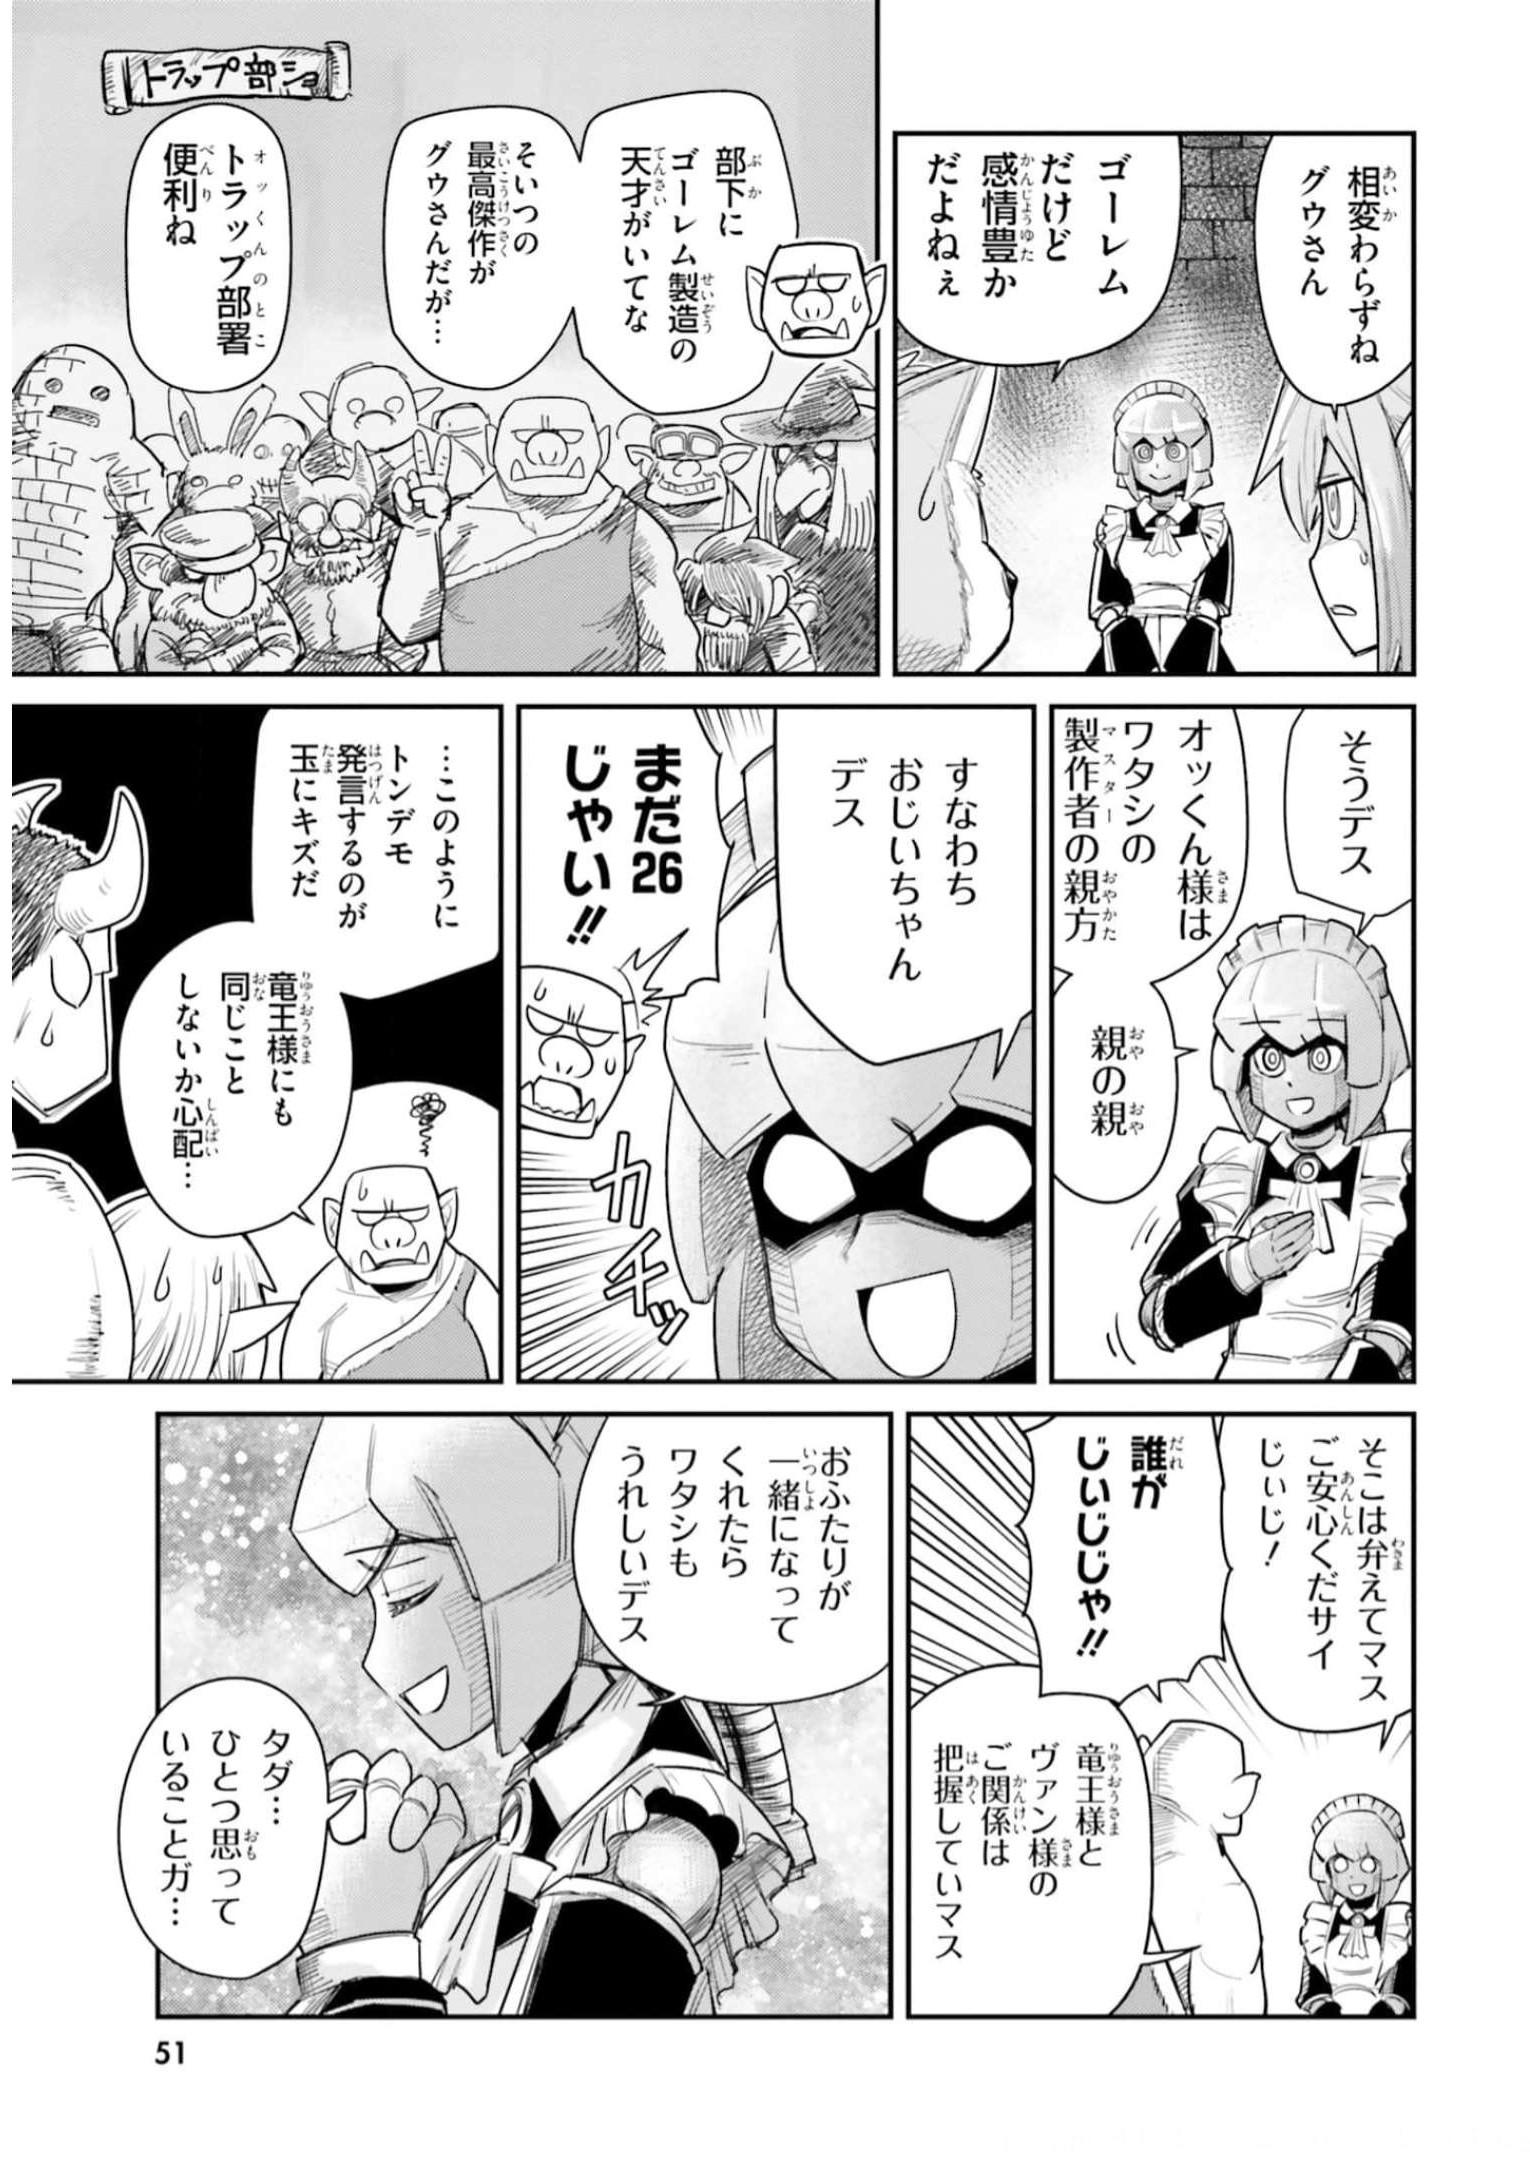 Dungeon no Osananajimi - Chapter 13 - Page 5